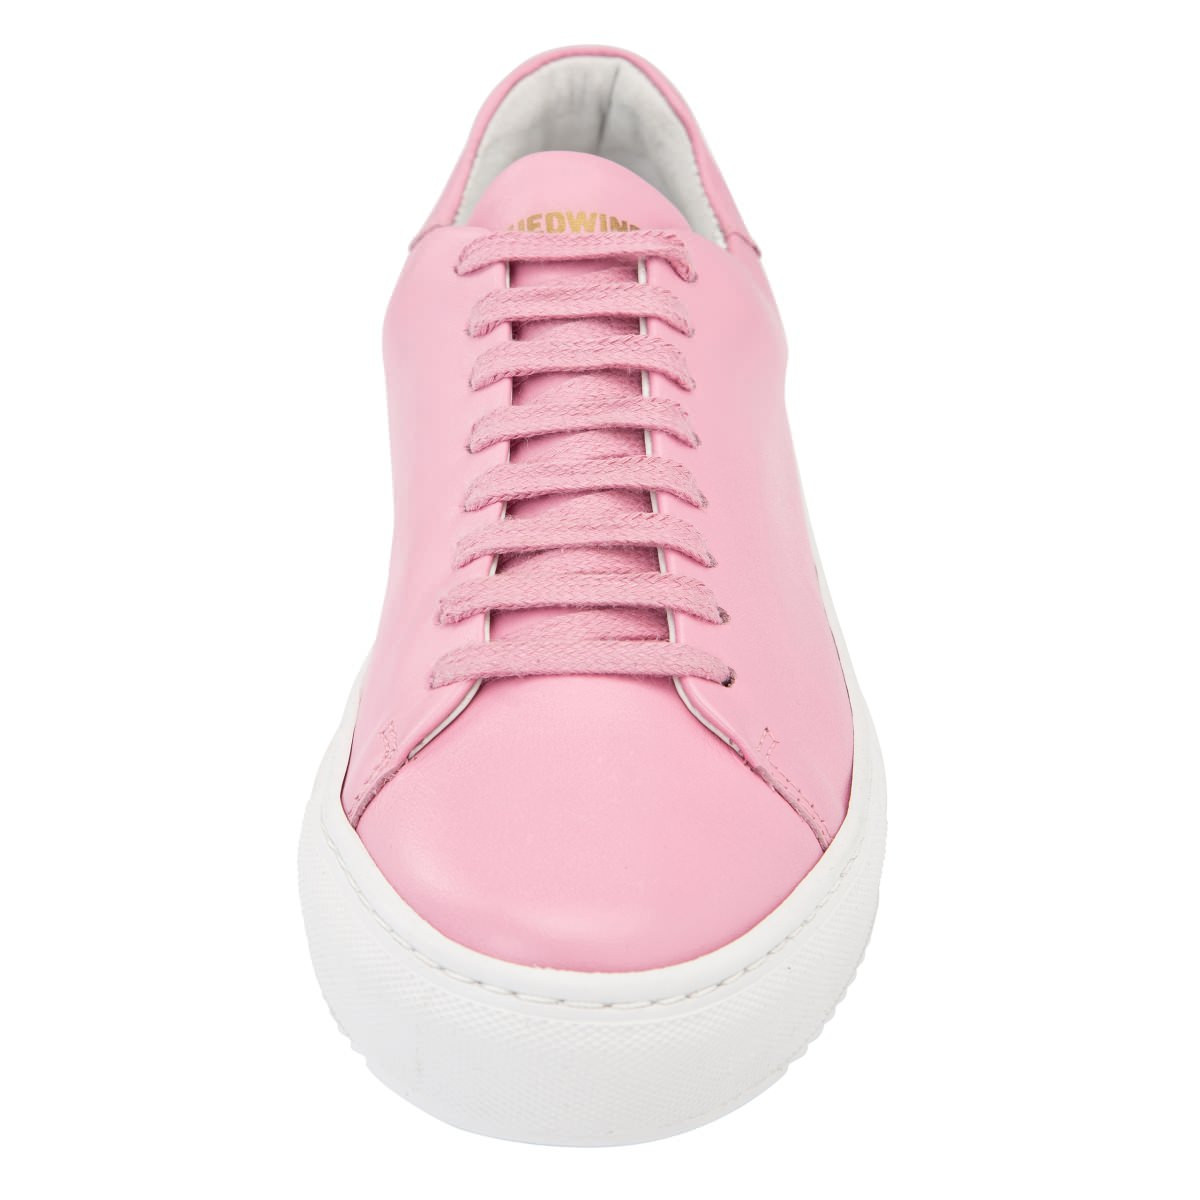 Suedwind-Ashton-Leather-Leder-Sneaker-Schuhe-Boots-Pink-10170027-03_1280x1280